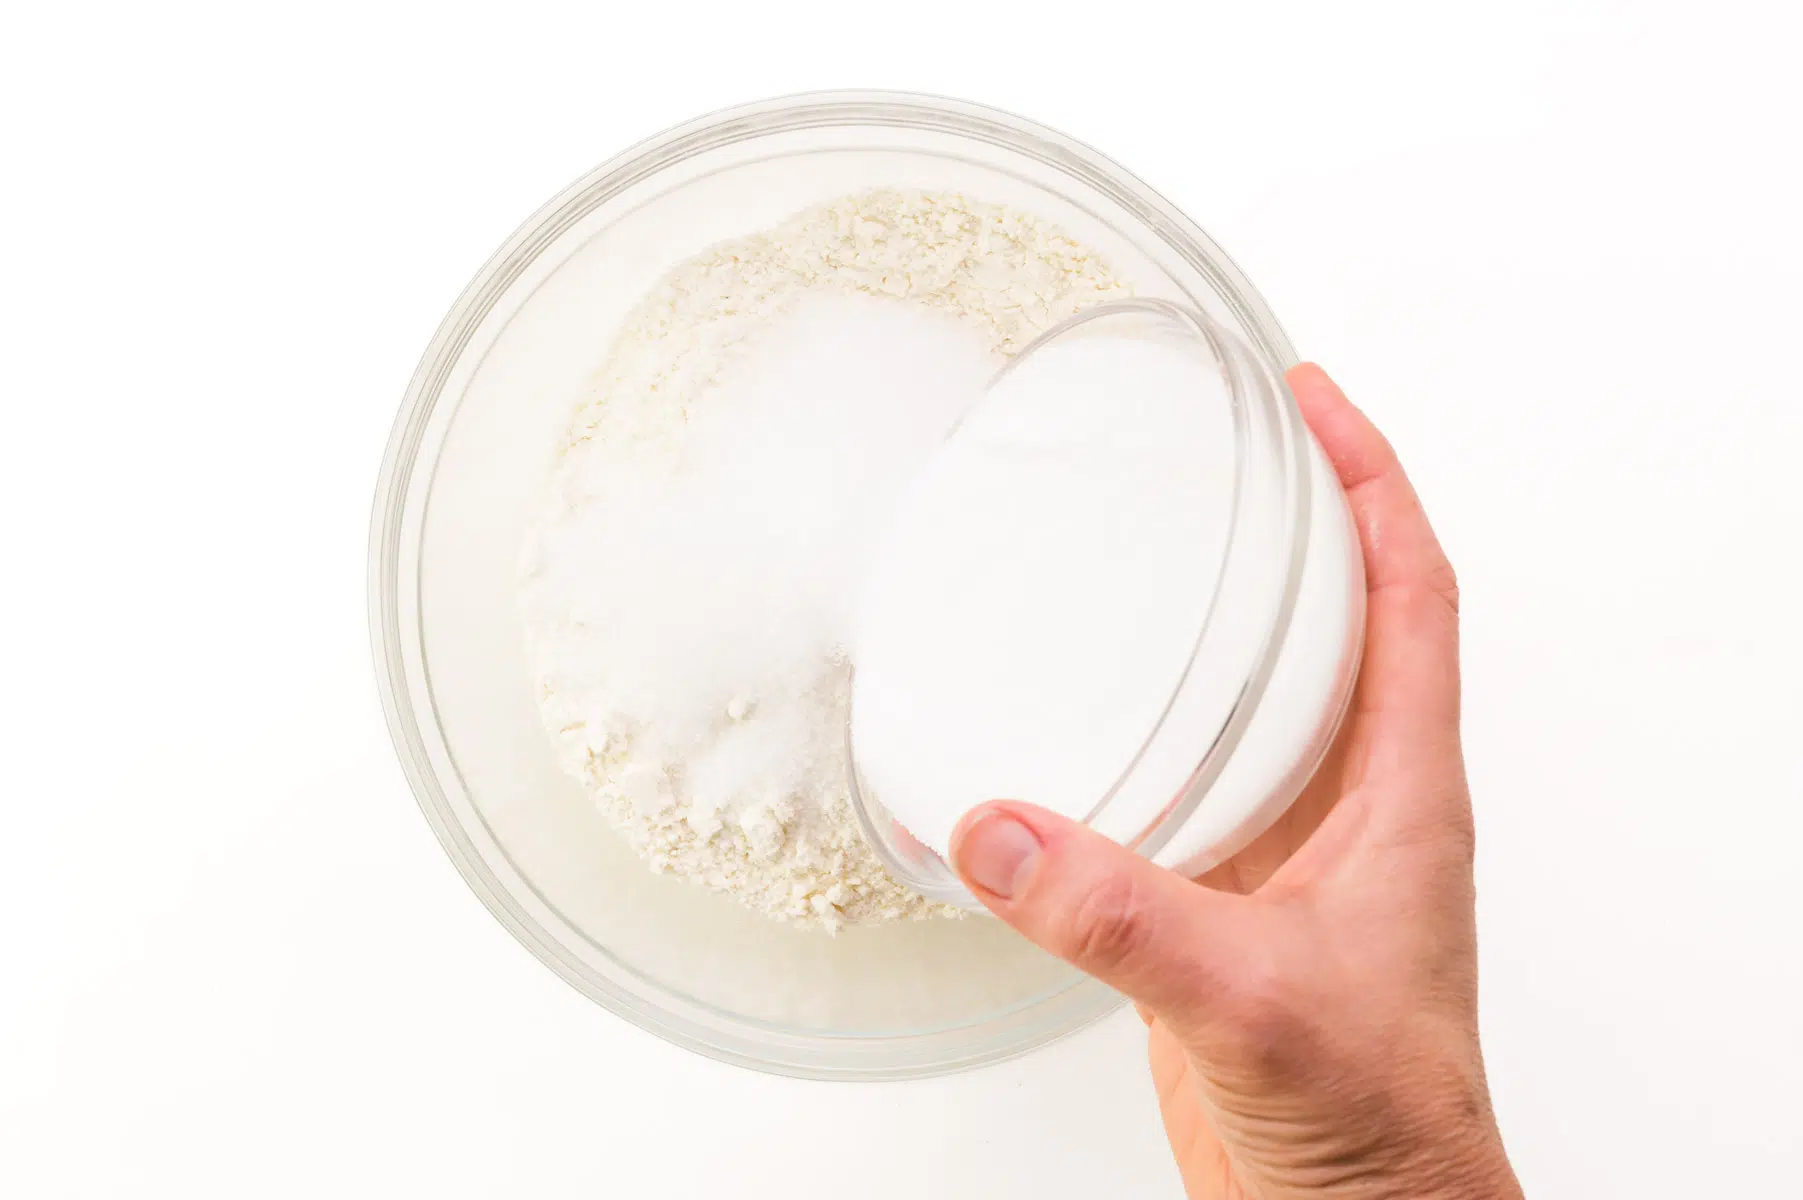 A hand pours a bowl of granulated sugar into a bowl of flour.